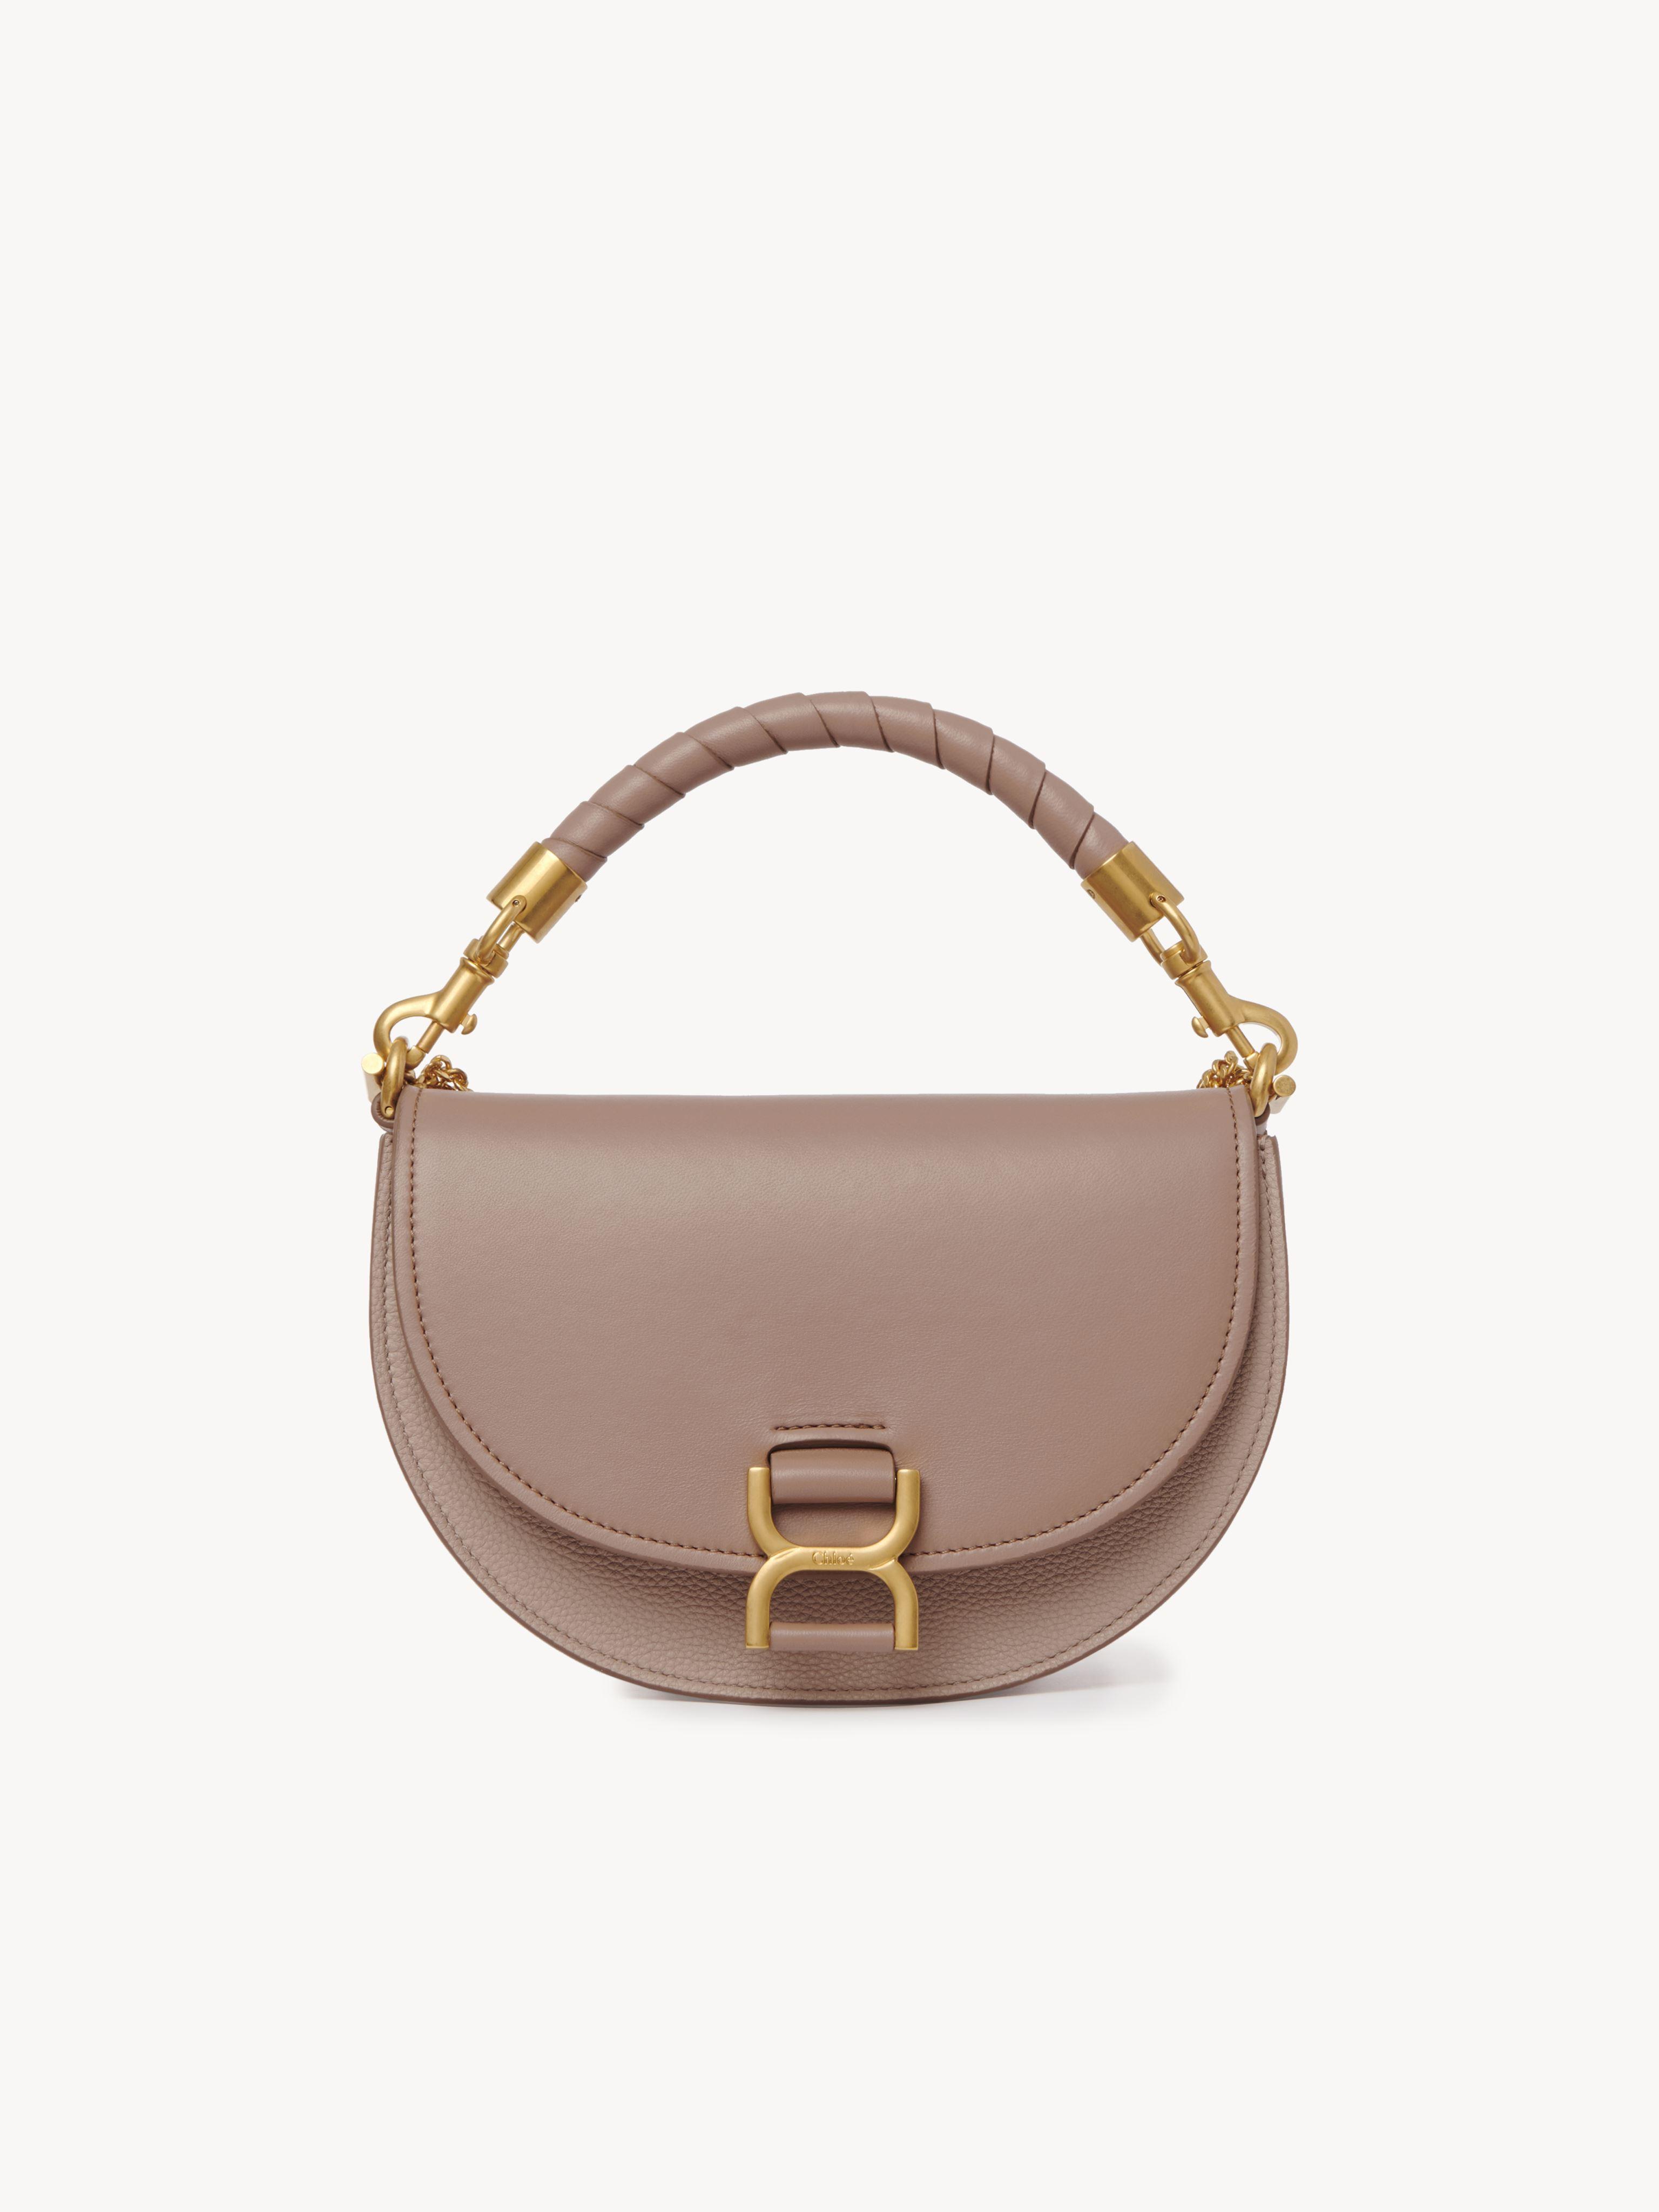 Chloé Marcie Chain Flap Bag in Brown | Lyst